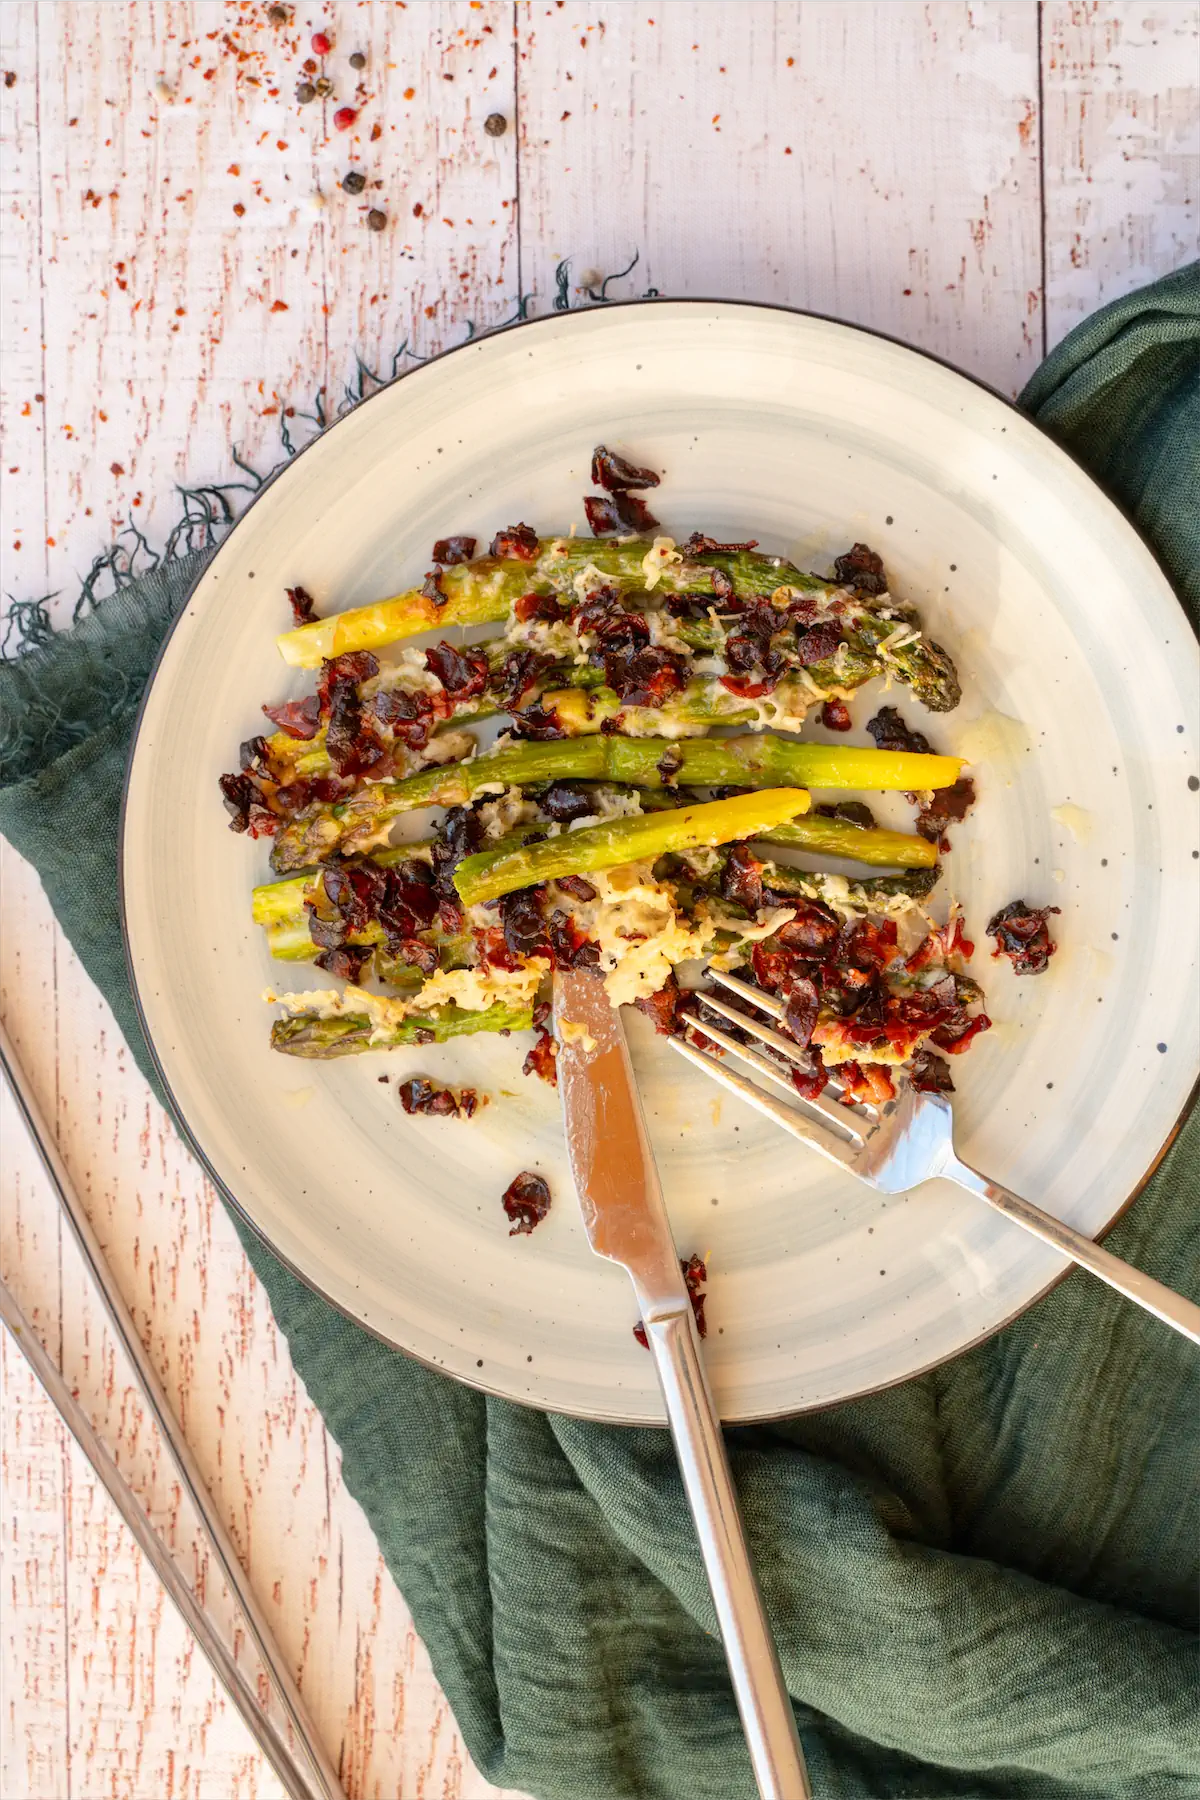 Homemade asparagus and bacon recipe.